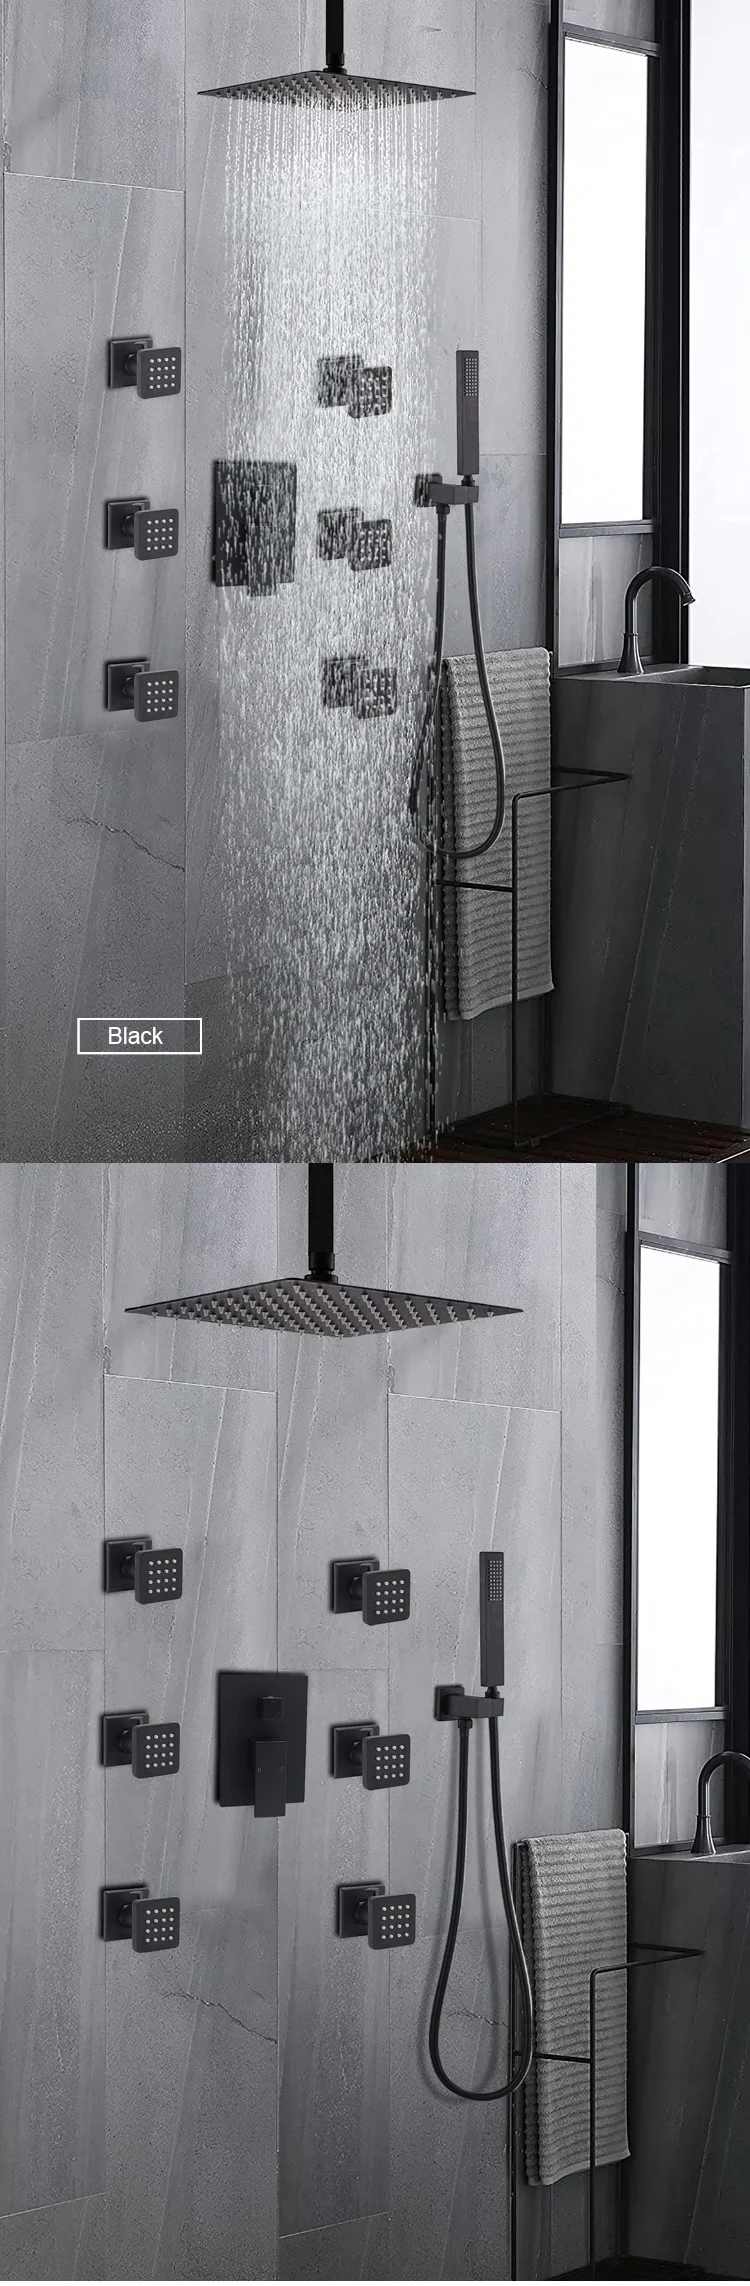 shower set black in wall mounted Bathroom taps brass kits rain rainfall showerset mixer faucet set bathroom fixtures set black